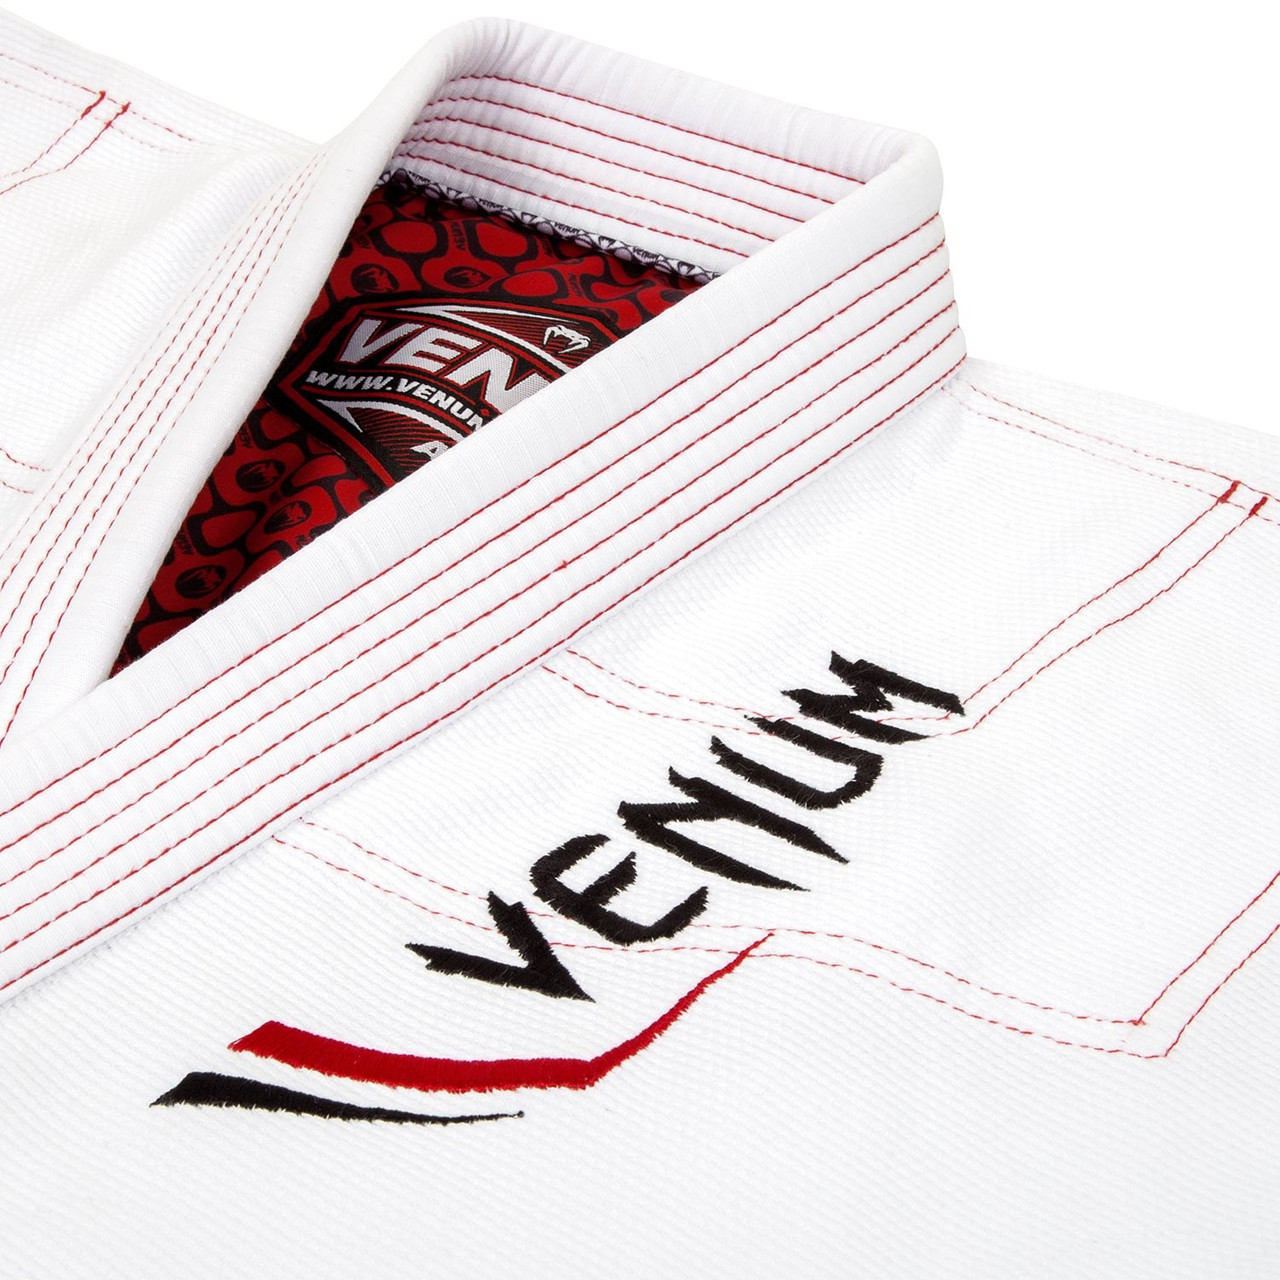 Venum Elite Light BJJ GI in White is now available at www.thejiujitsushop.com

Enjoy Free Shipping from The Jiu Jitsu Shop today! 